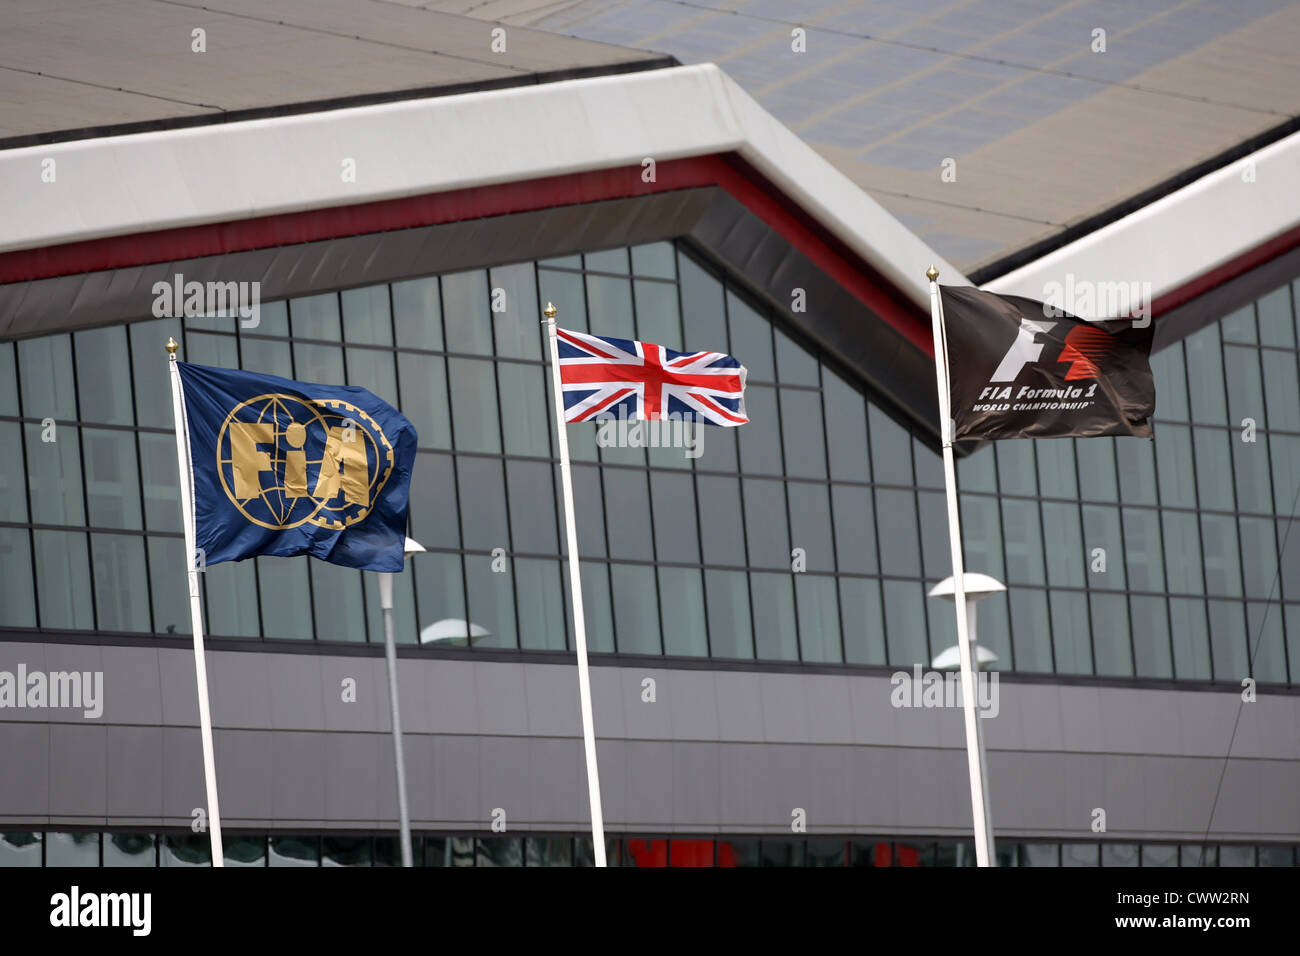 The Wing at Silverstone Circuit. British Grand Prix, Silverstone UK. Formula One, F1 Stock Photo